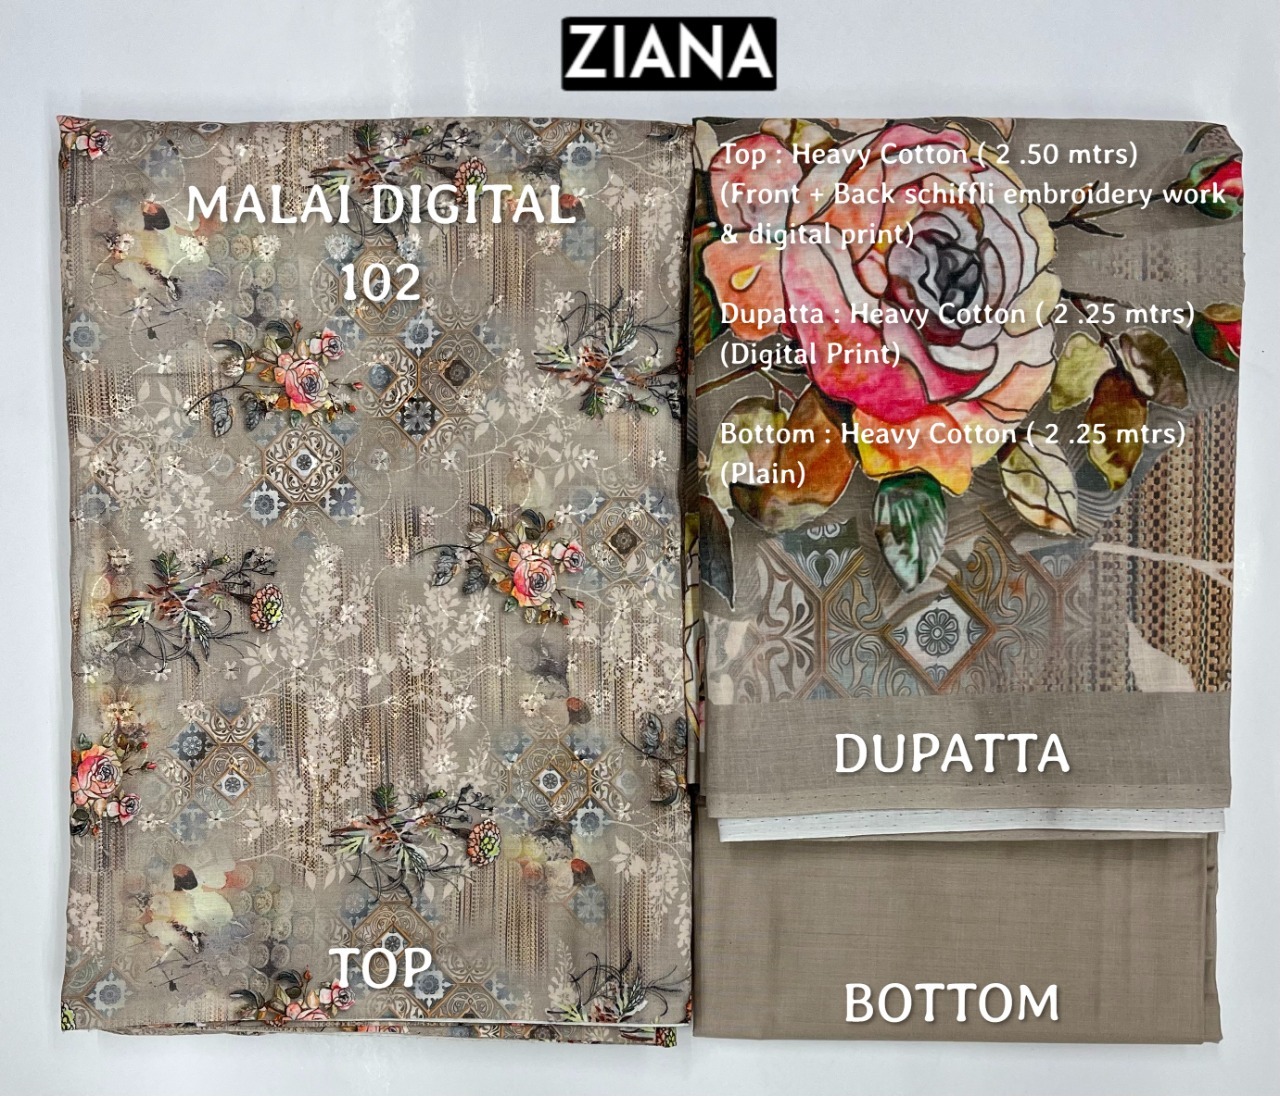 ziana malai digital 102 heavy cotton attrective look embroidery salwar suit colour set